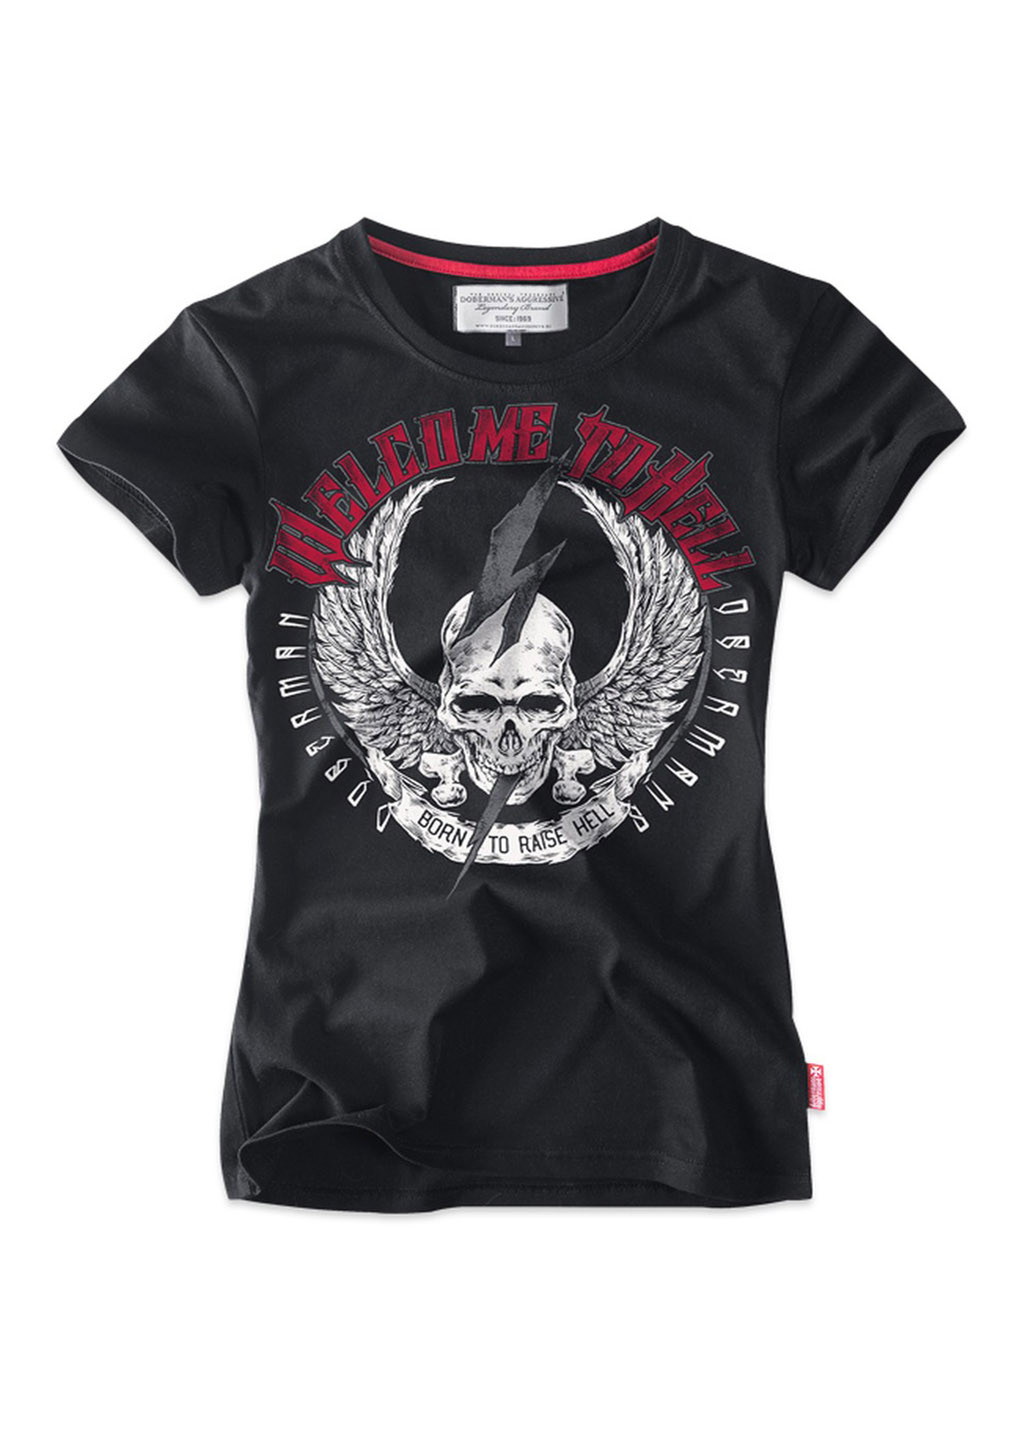 Черная летняя футболка dobermans welcome to hell tsd155bk Dobermans Aggressive